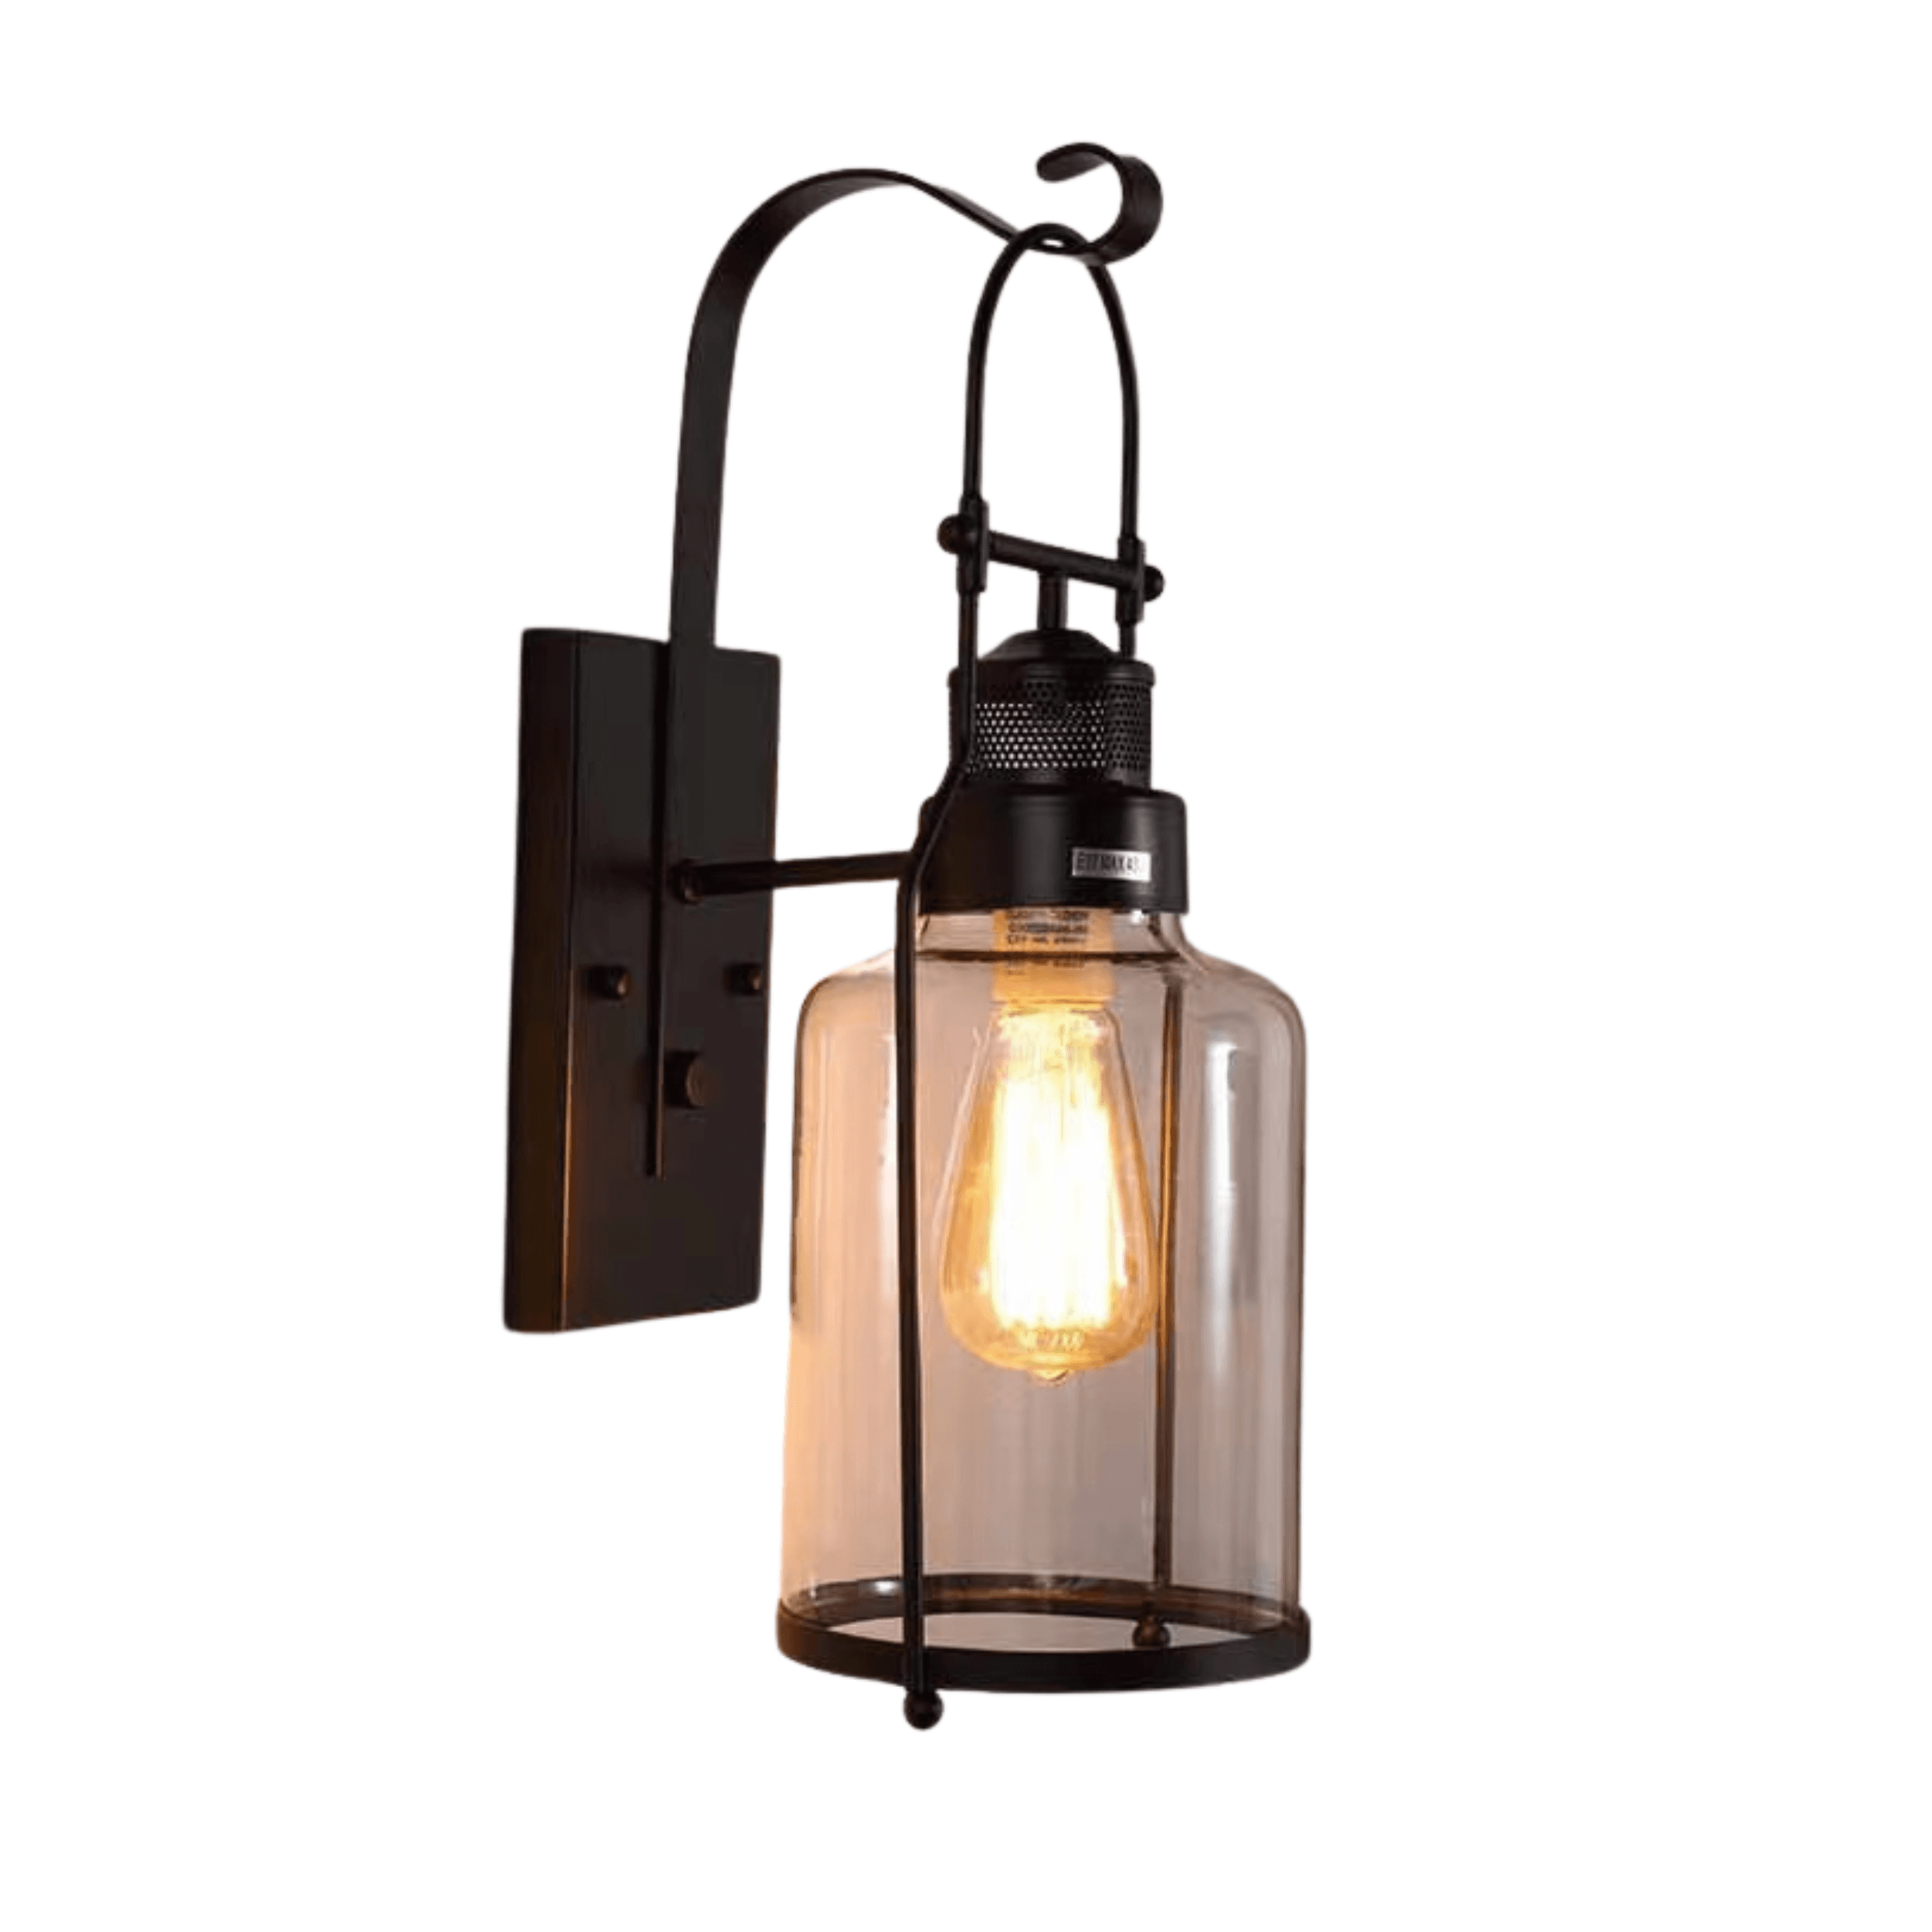 Wall lamp / Wall lamp - lantern